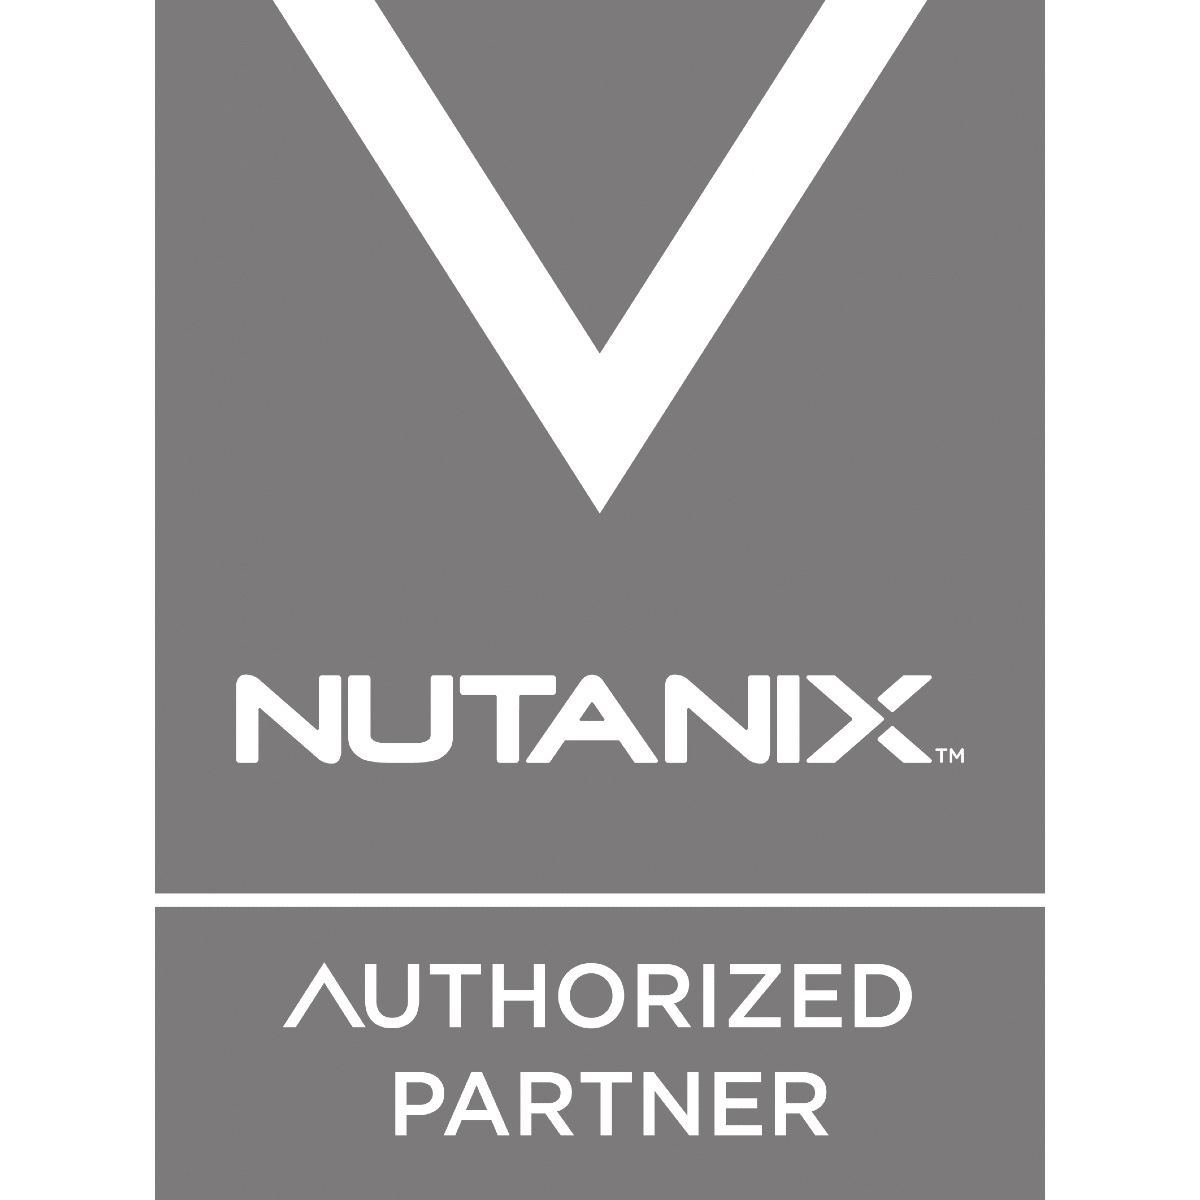 Nutanix partner logo